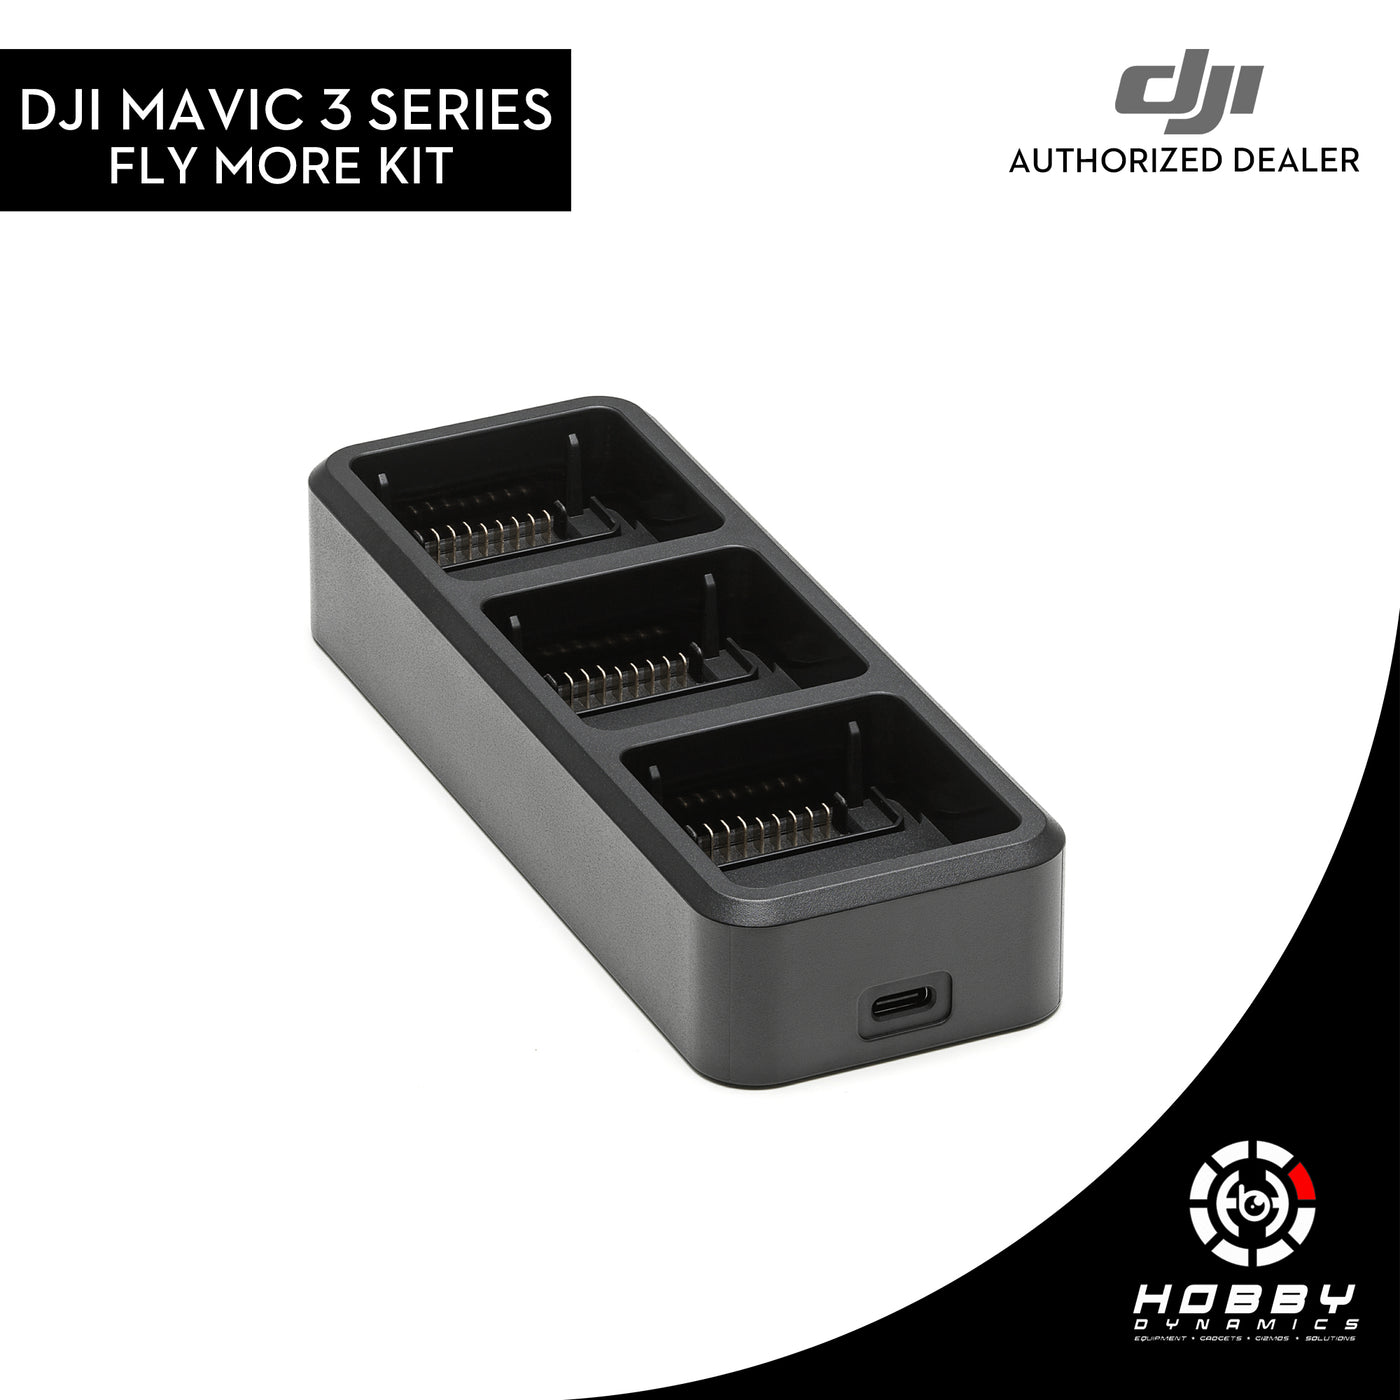 DJI Mavic 3 Series Fly More Kit